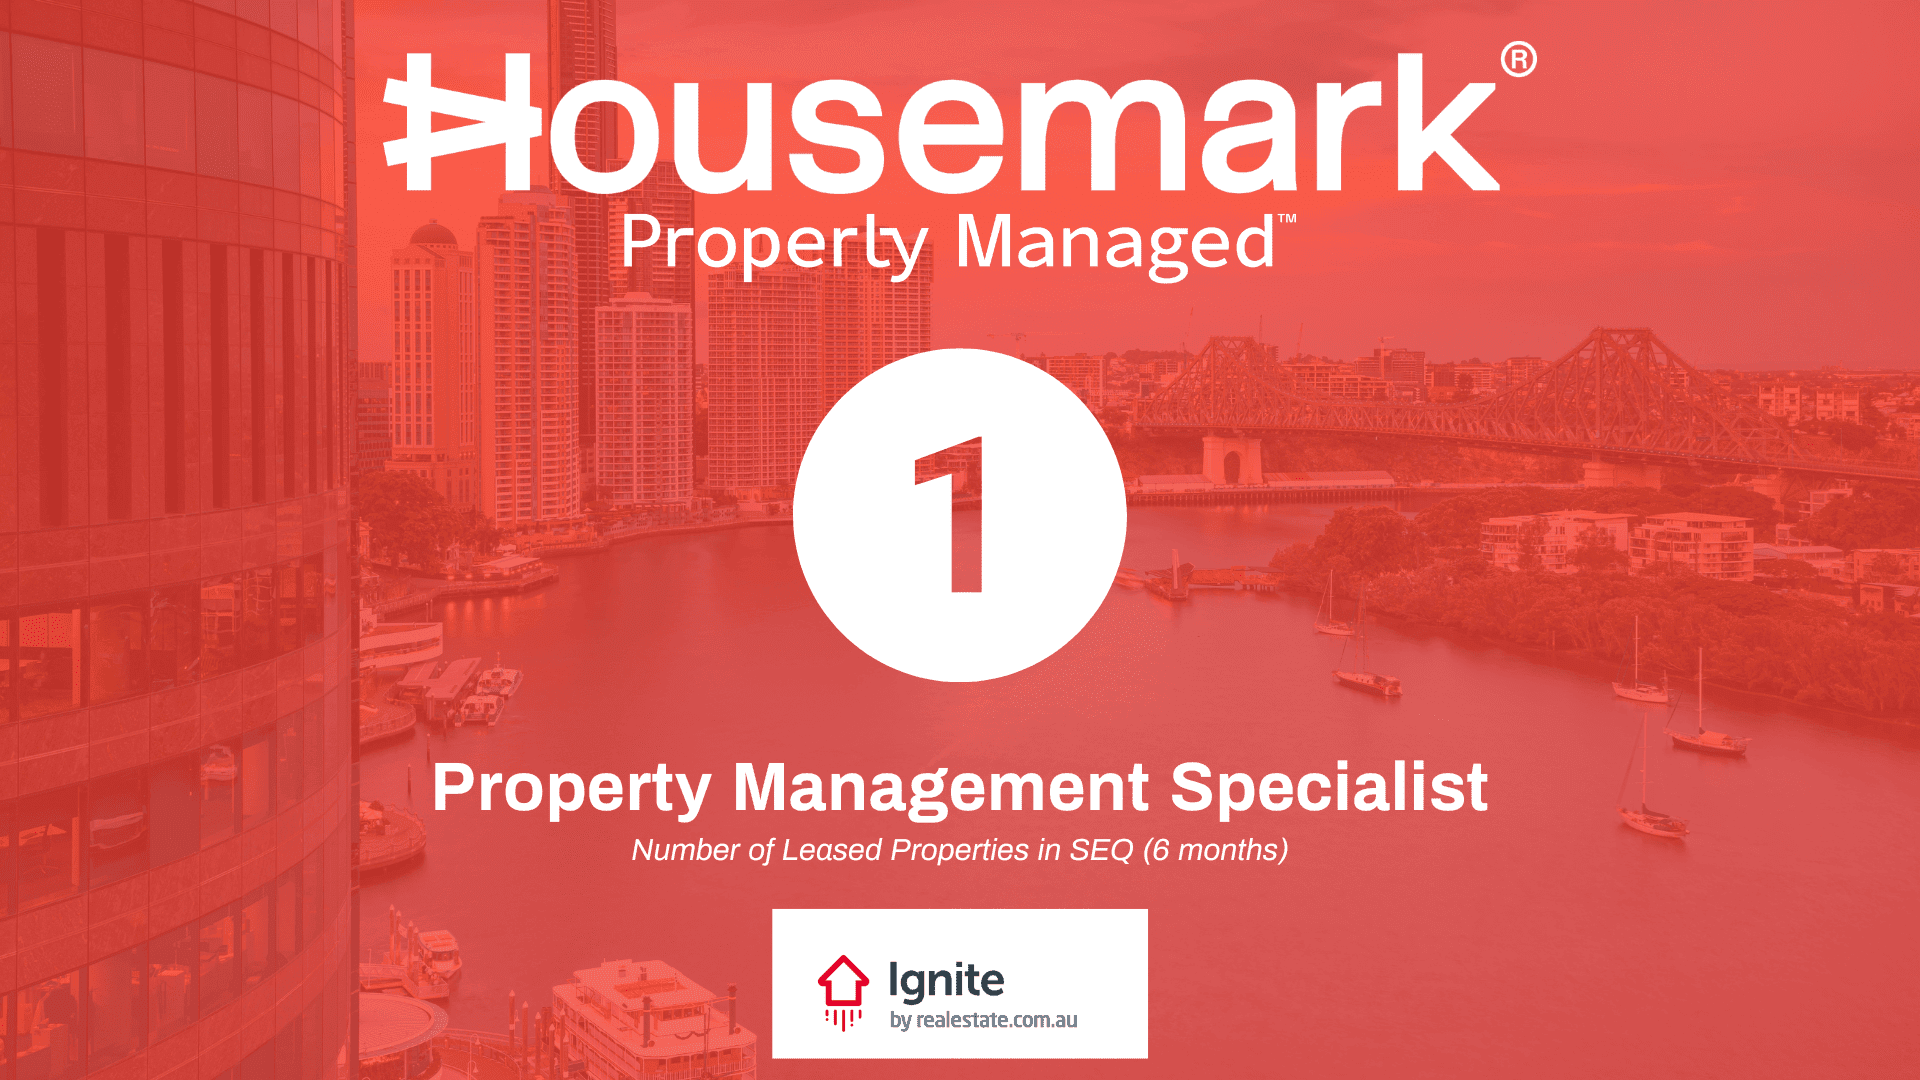 Housemark Property Management